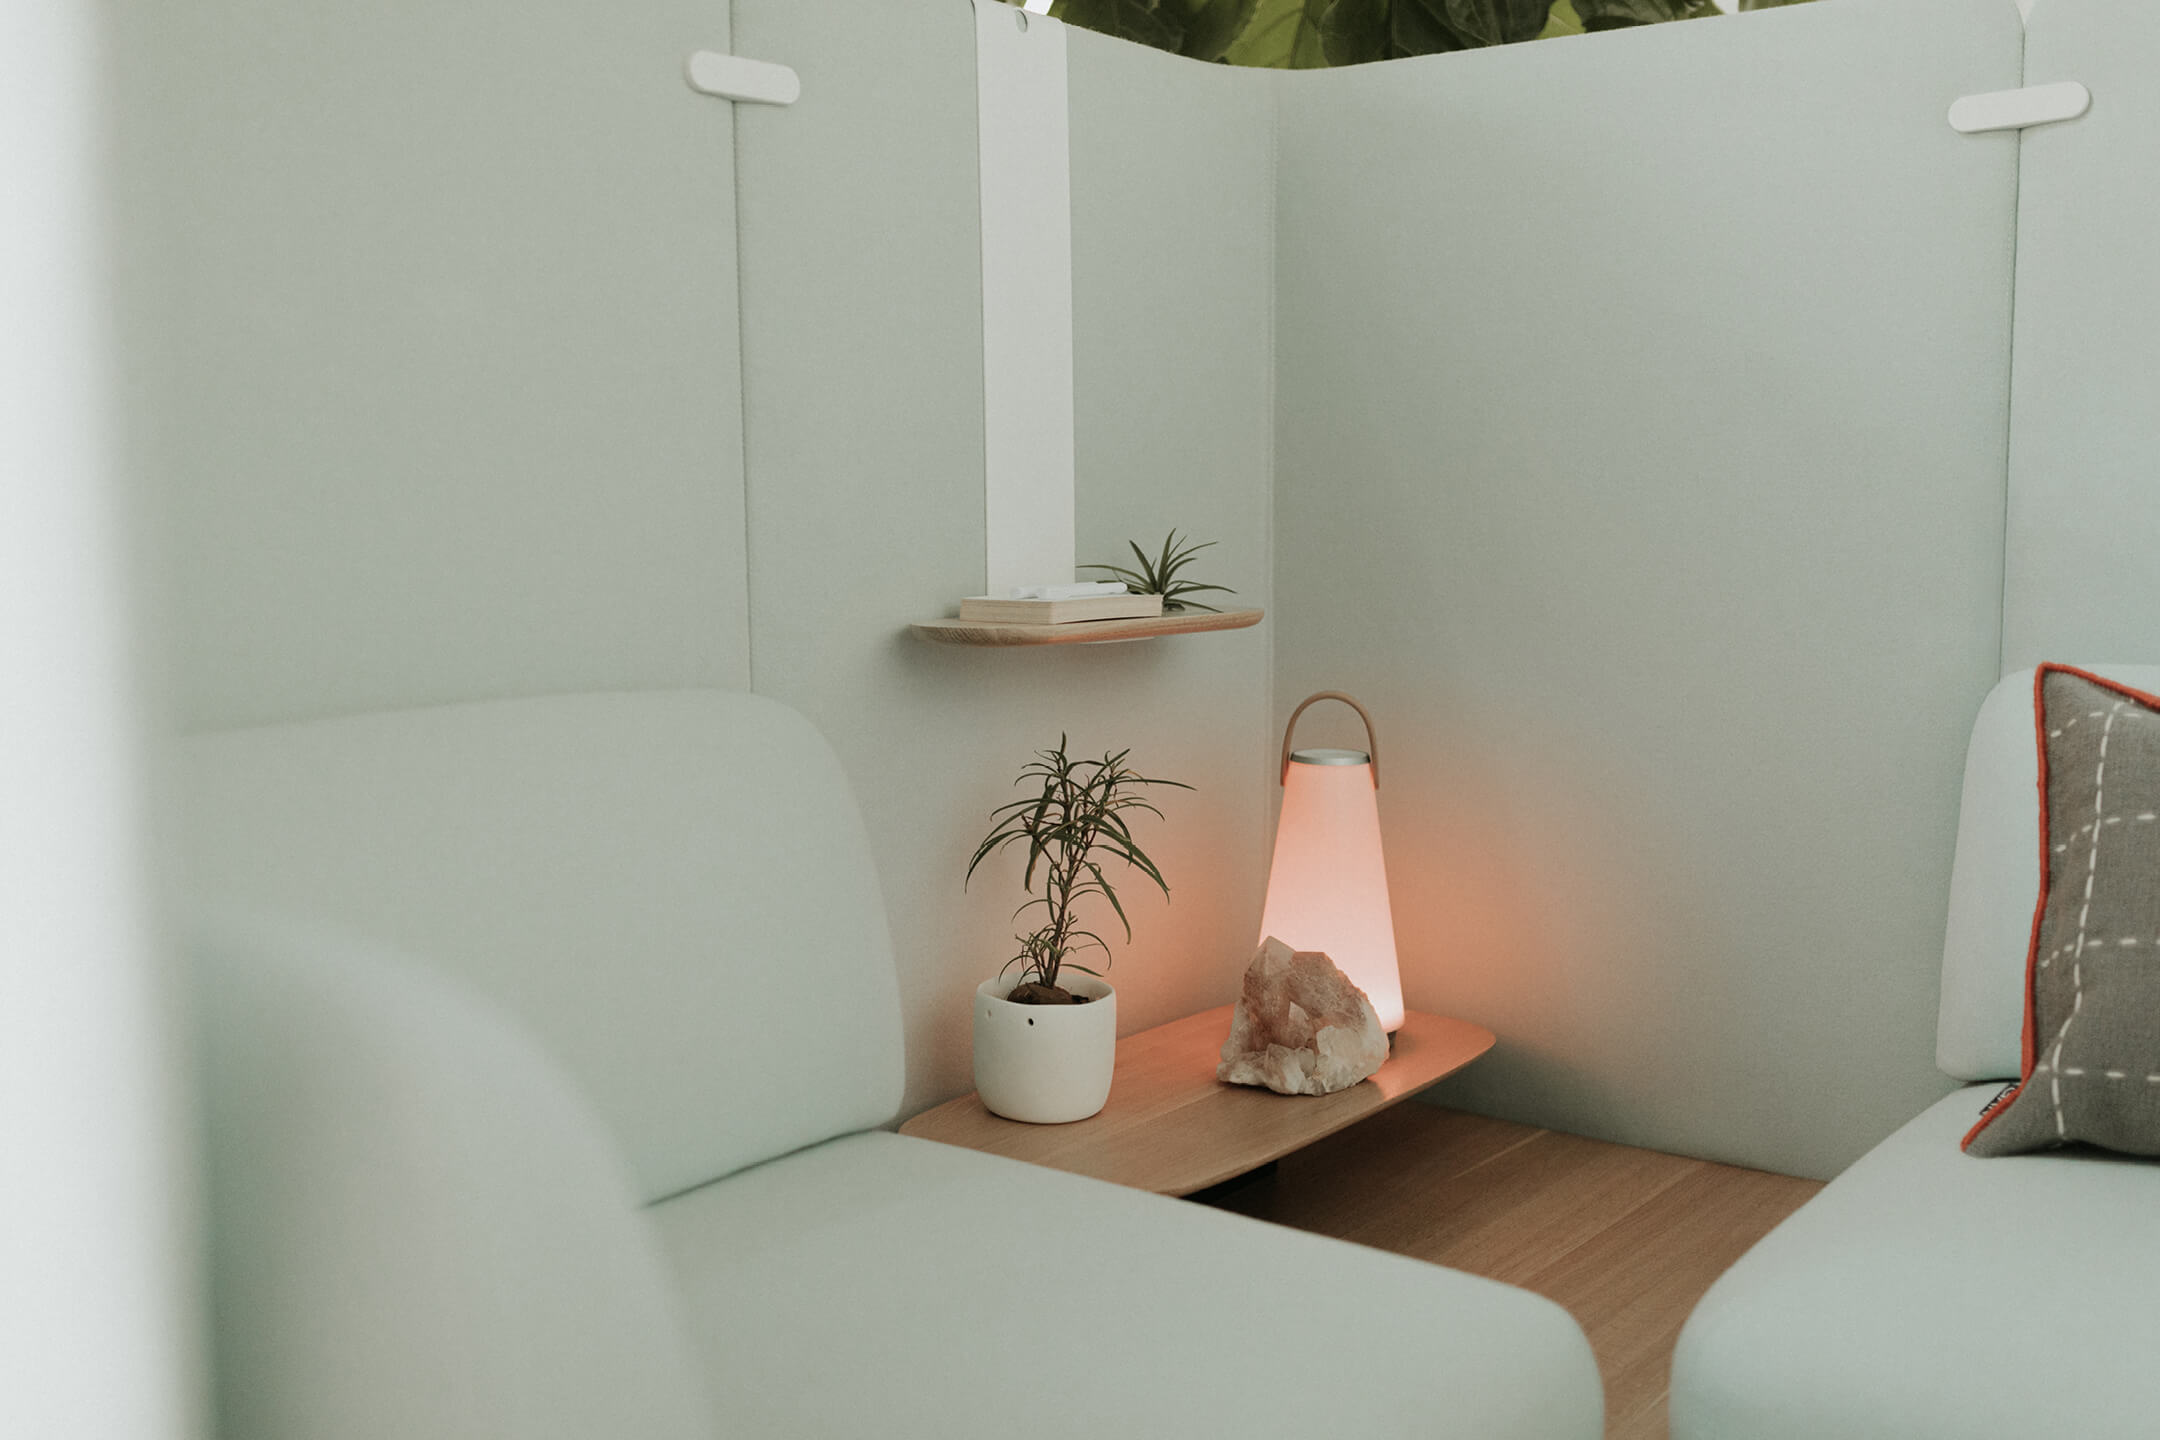 Haworth Pablo Pardo Designer desk lamp in private office couch space